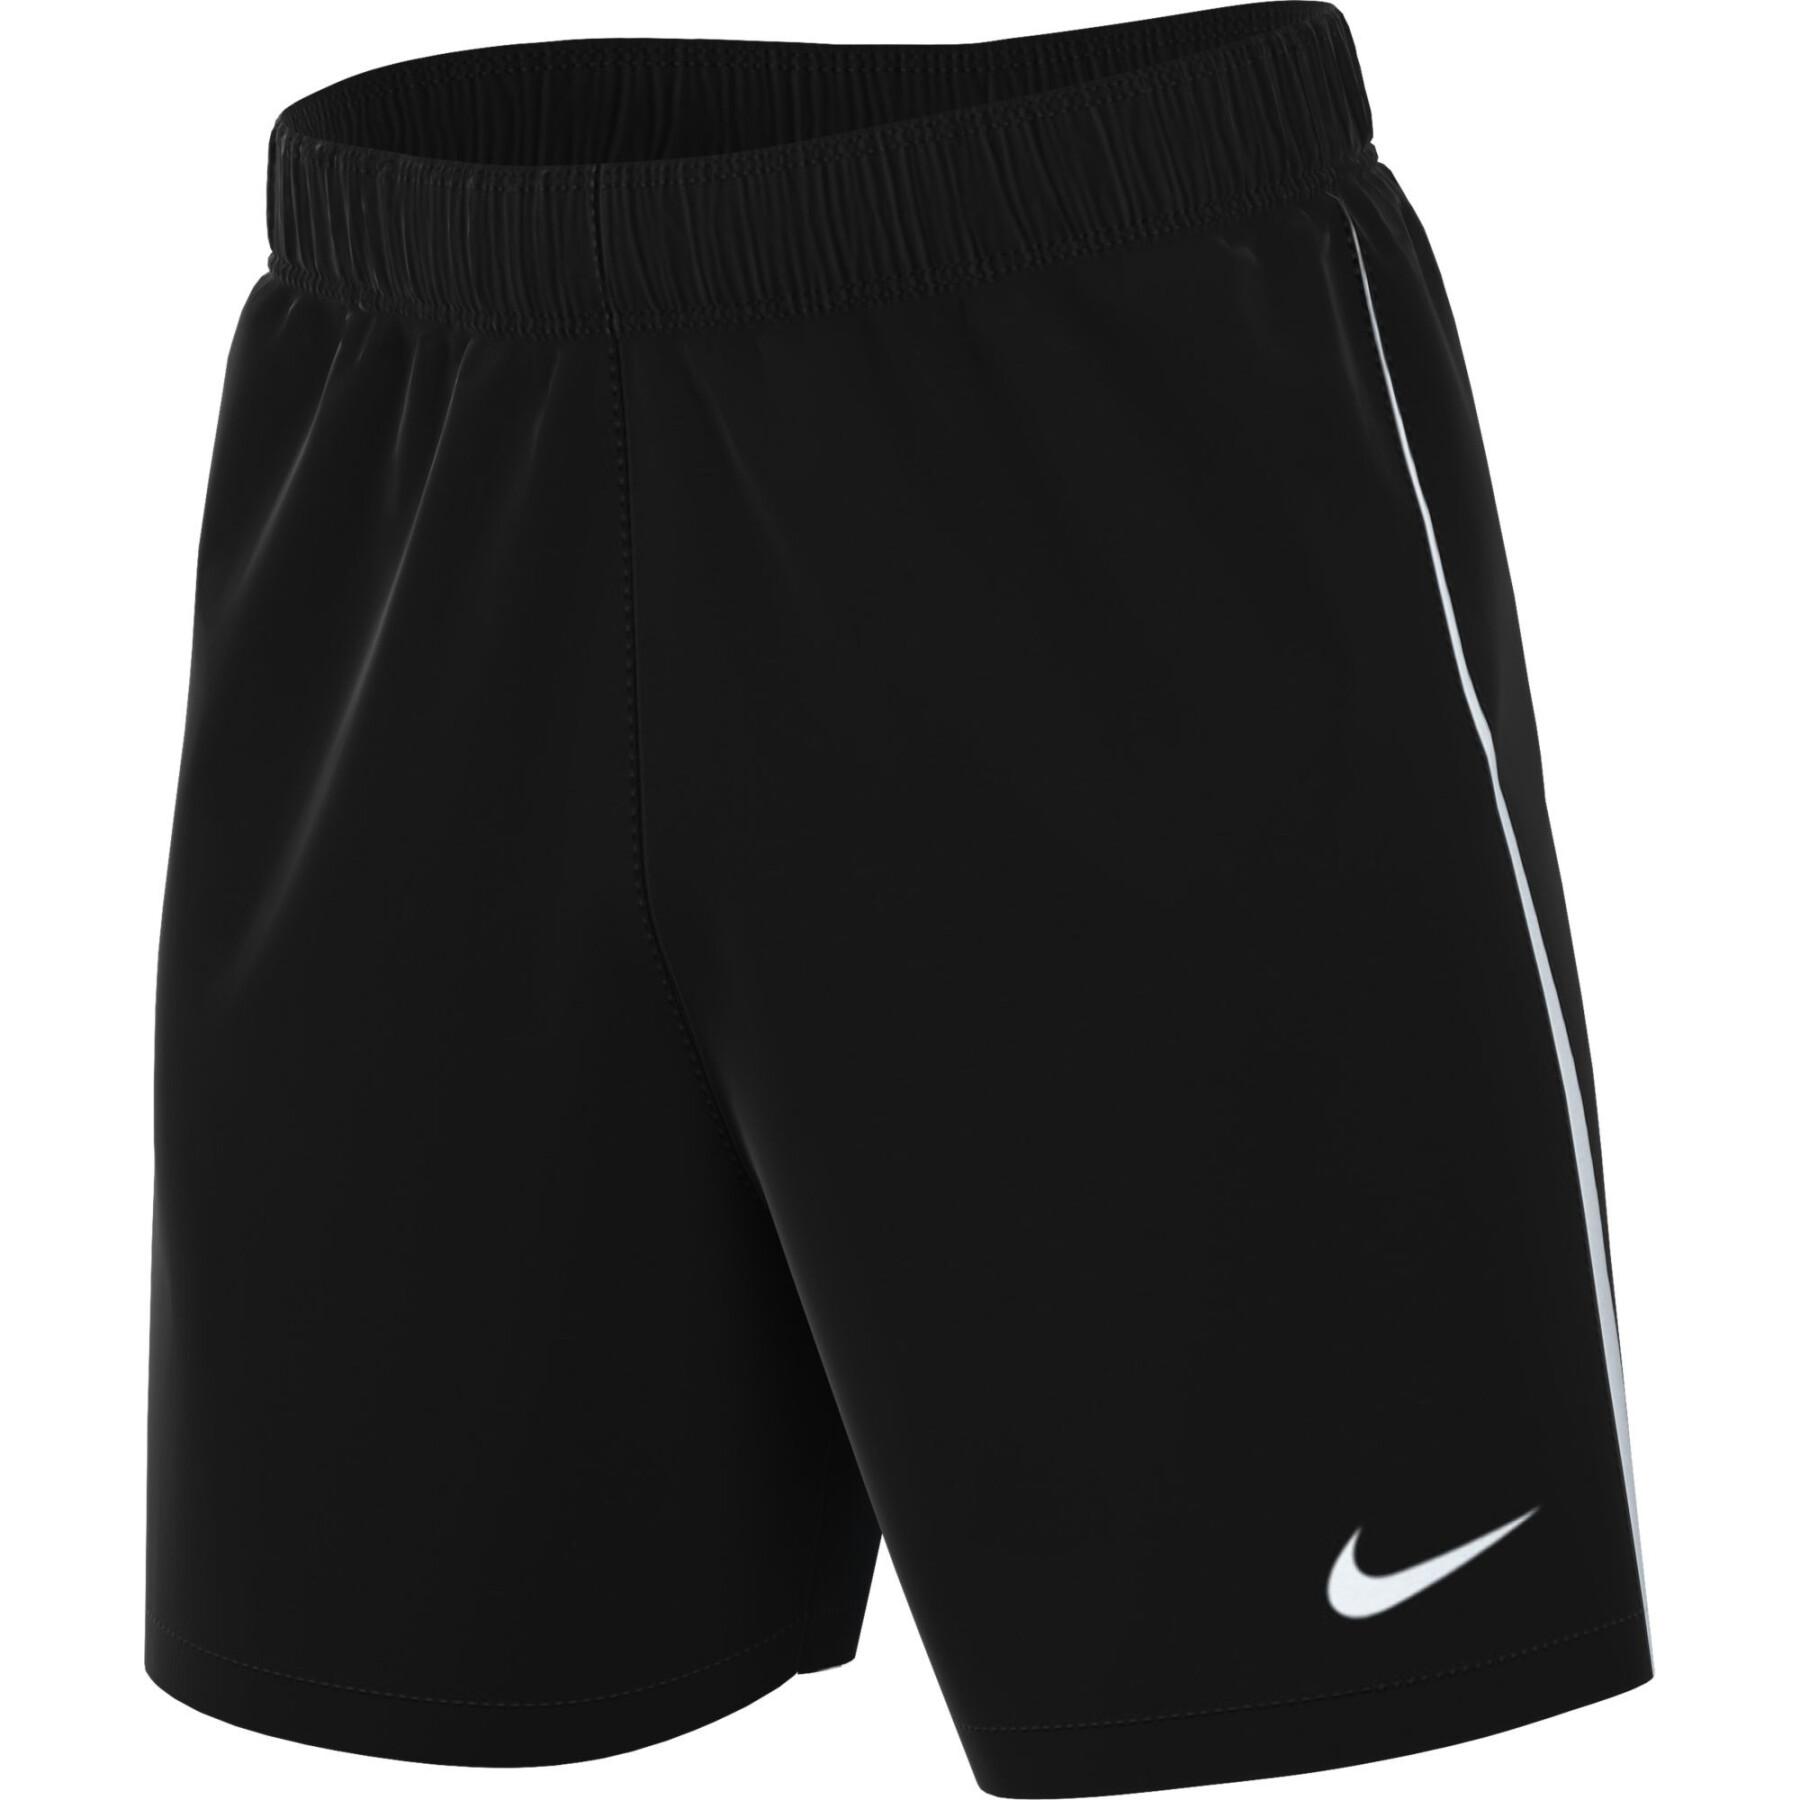 Pantalón corto de malla Nike Dri-Fit LGE III